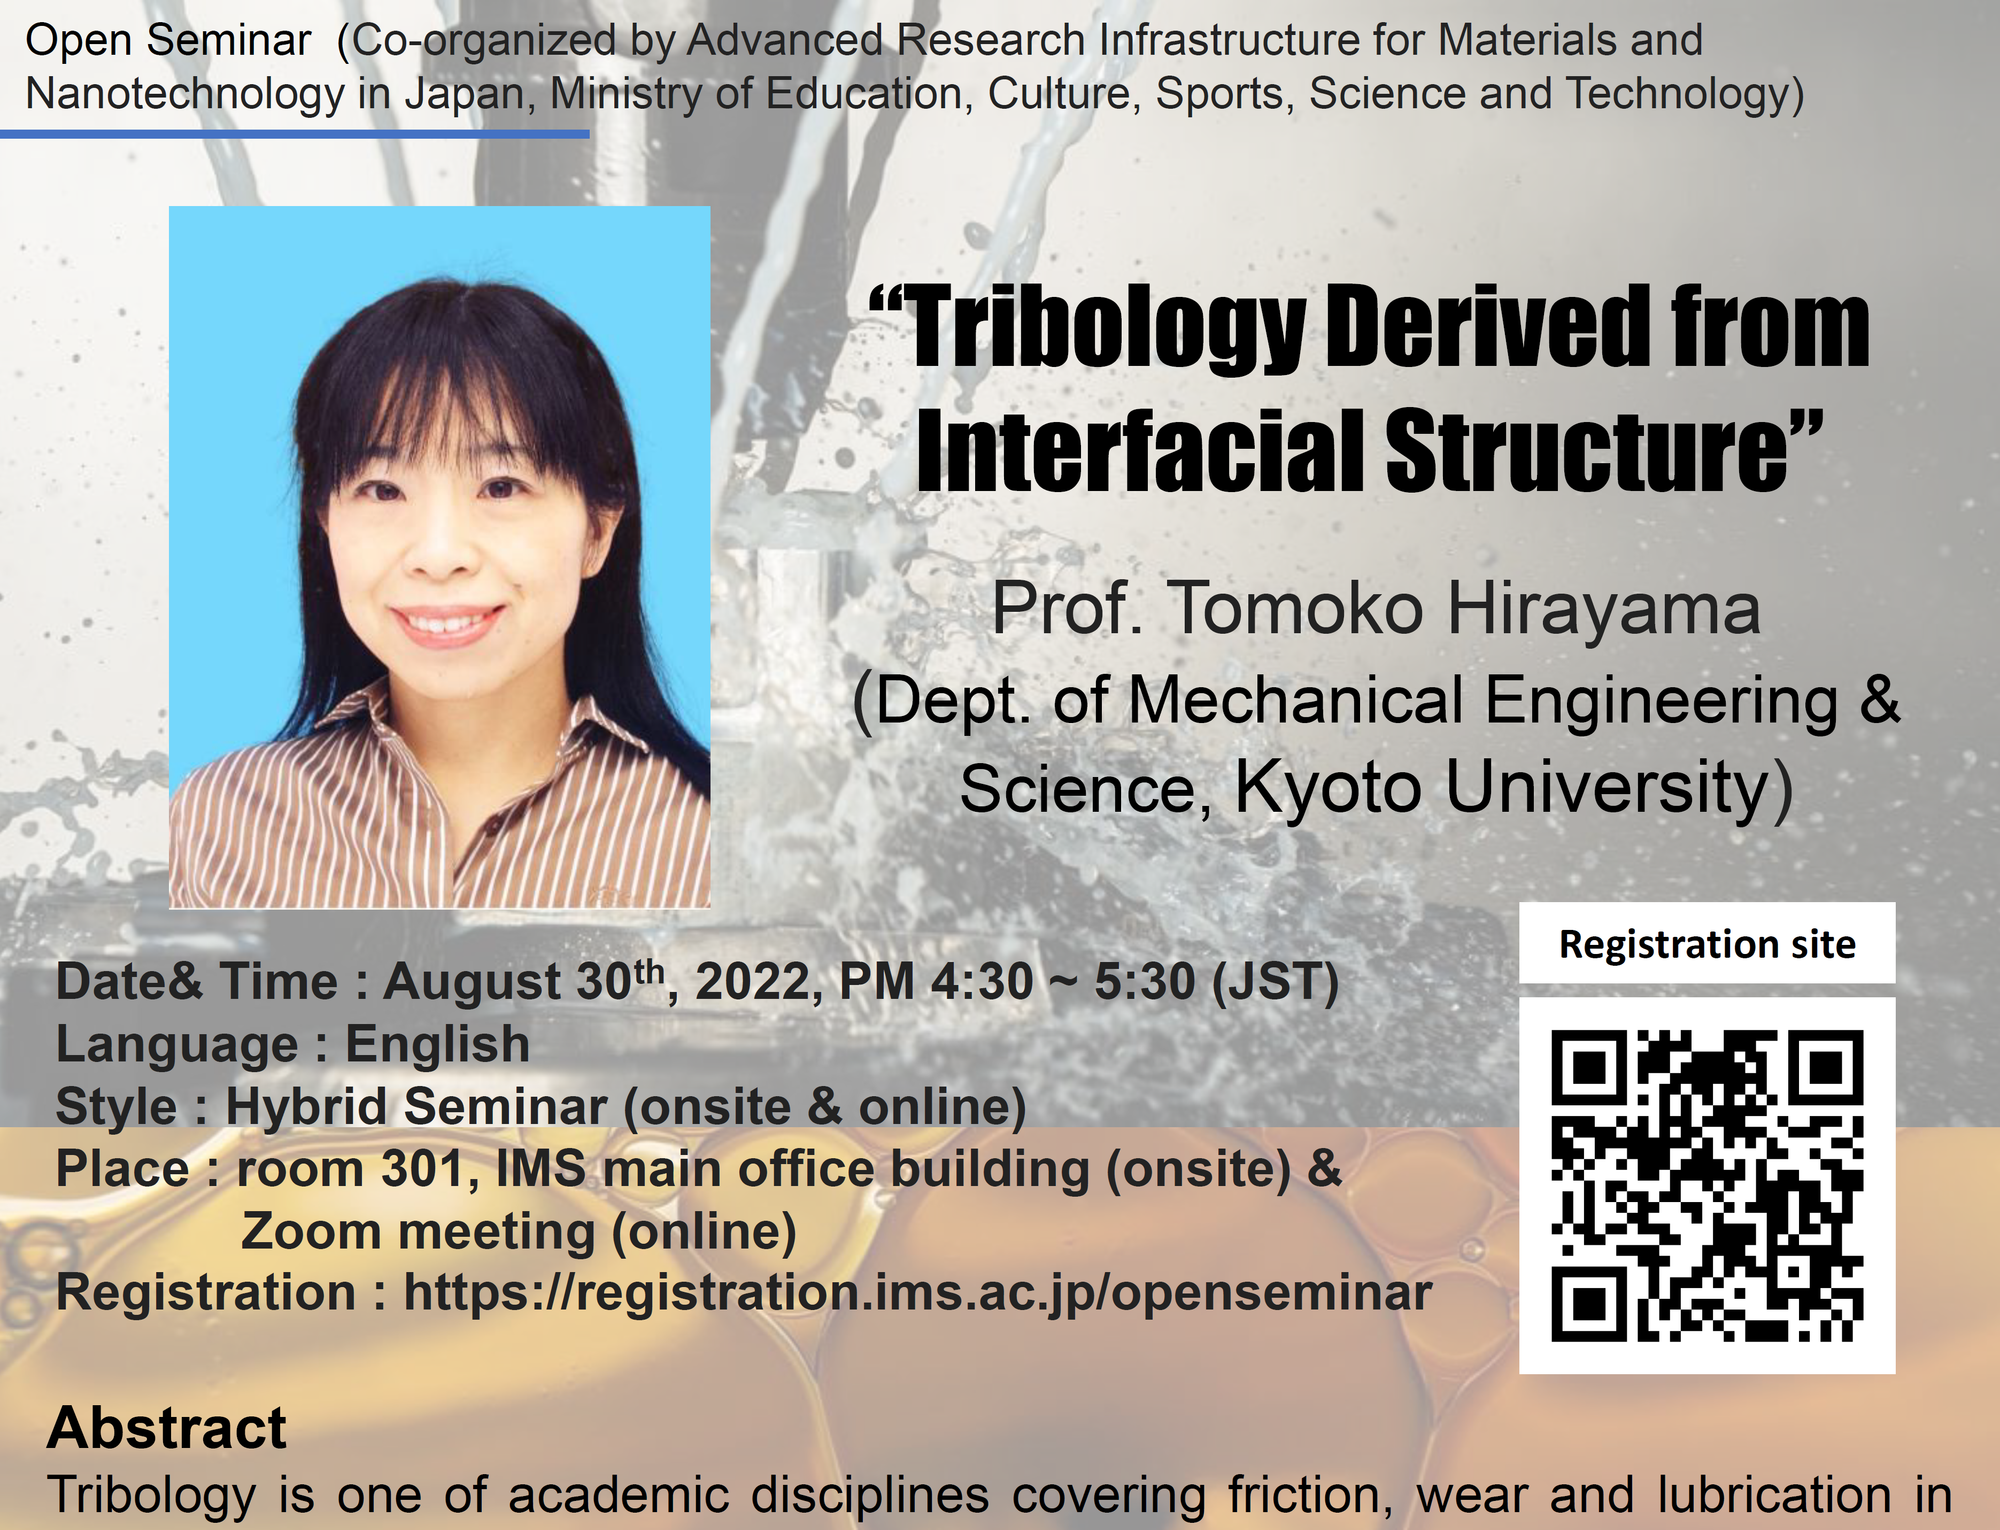 Hybrid Seminar by Prof. Tomoko Hirayama (Kyoto Univ.)